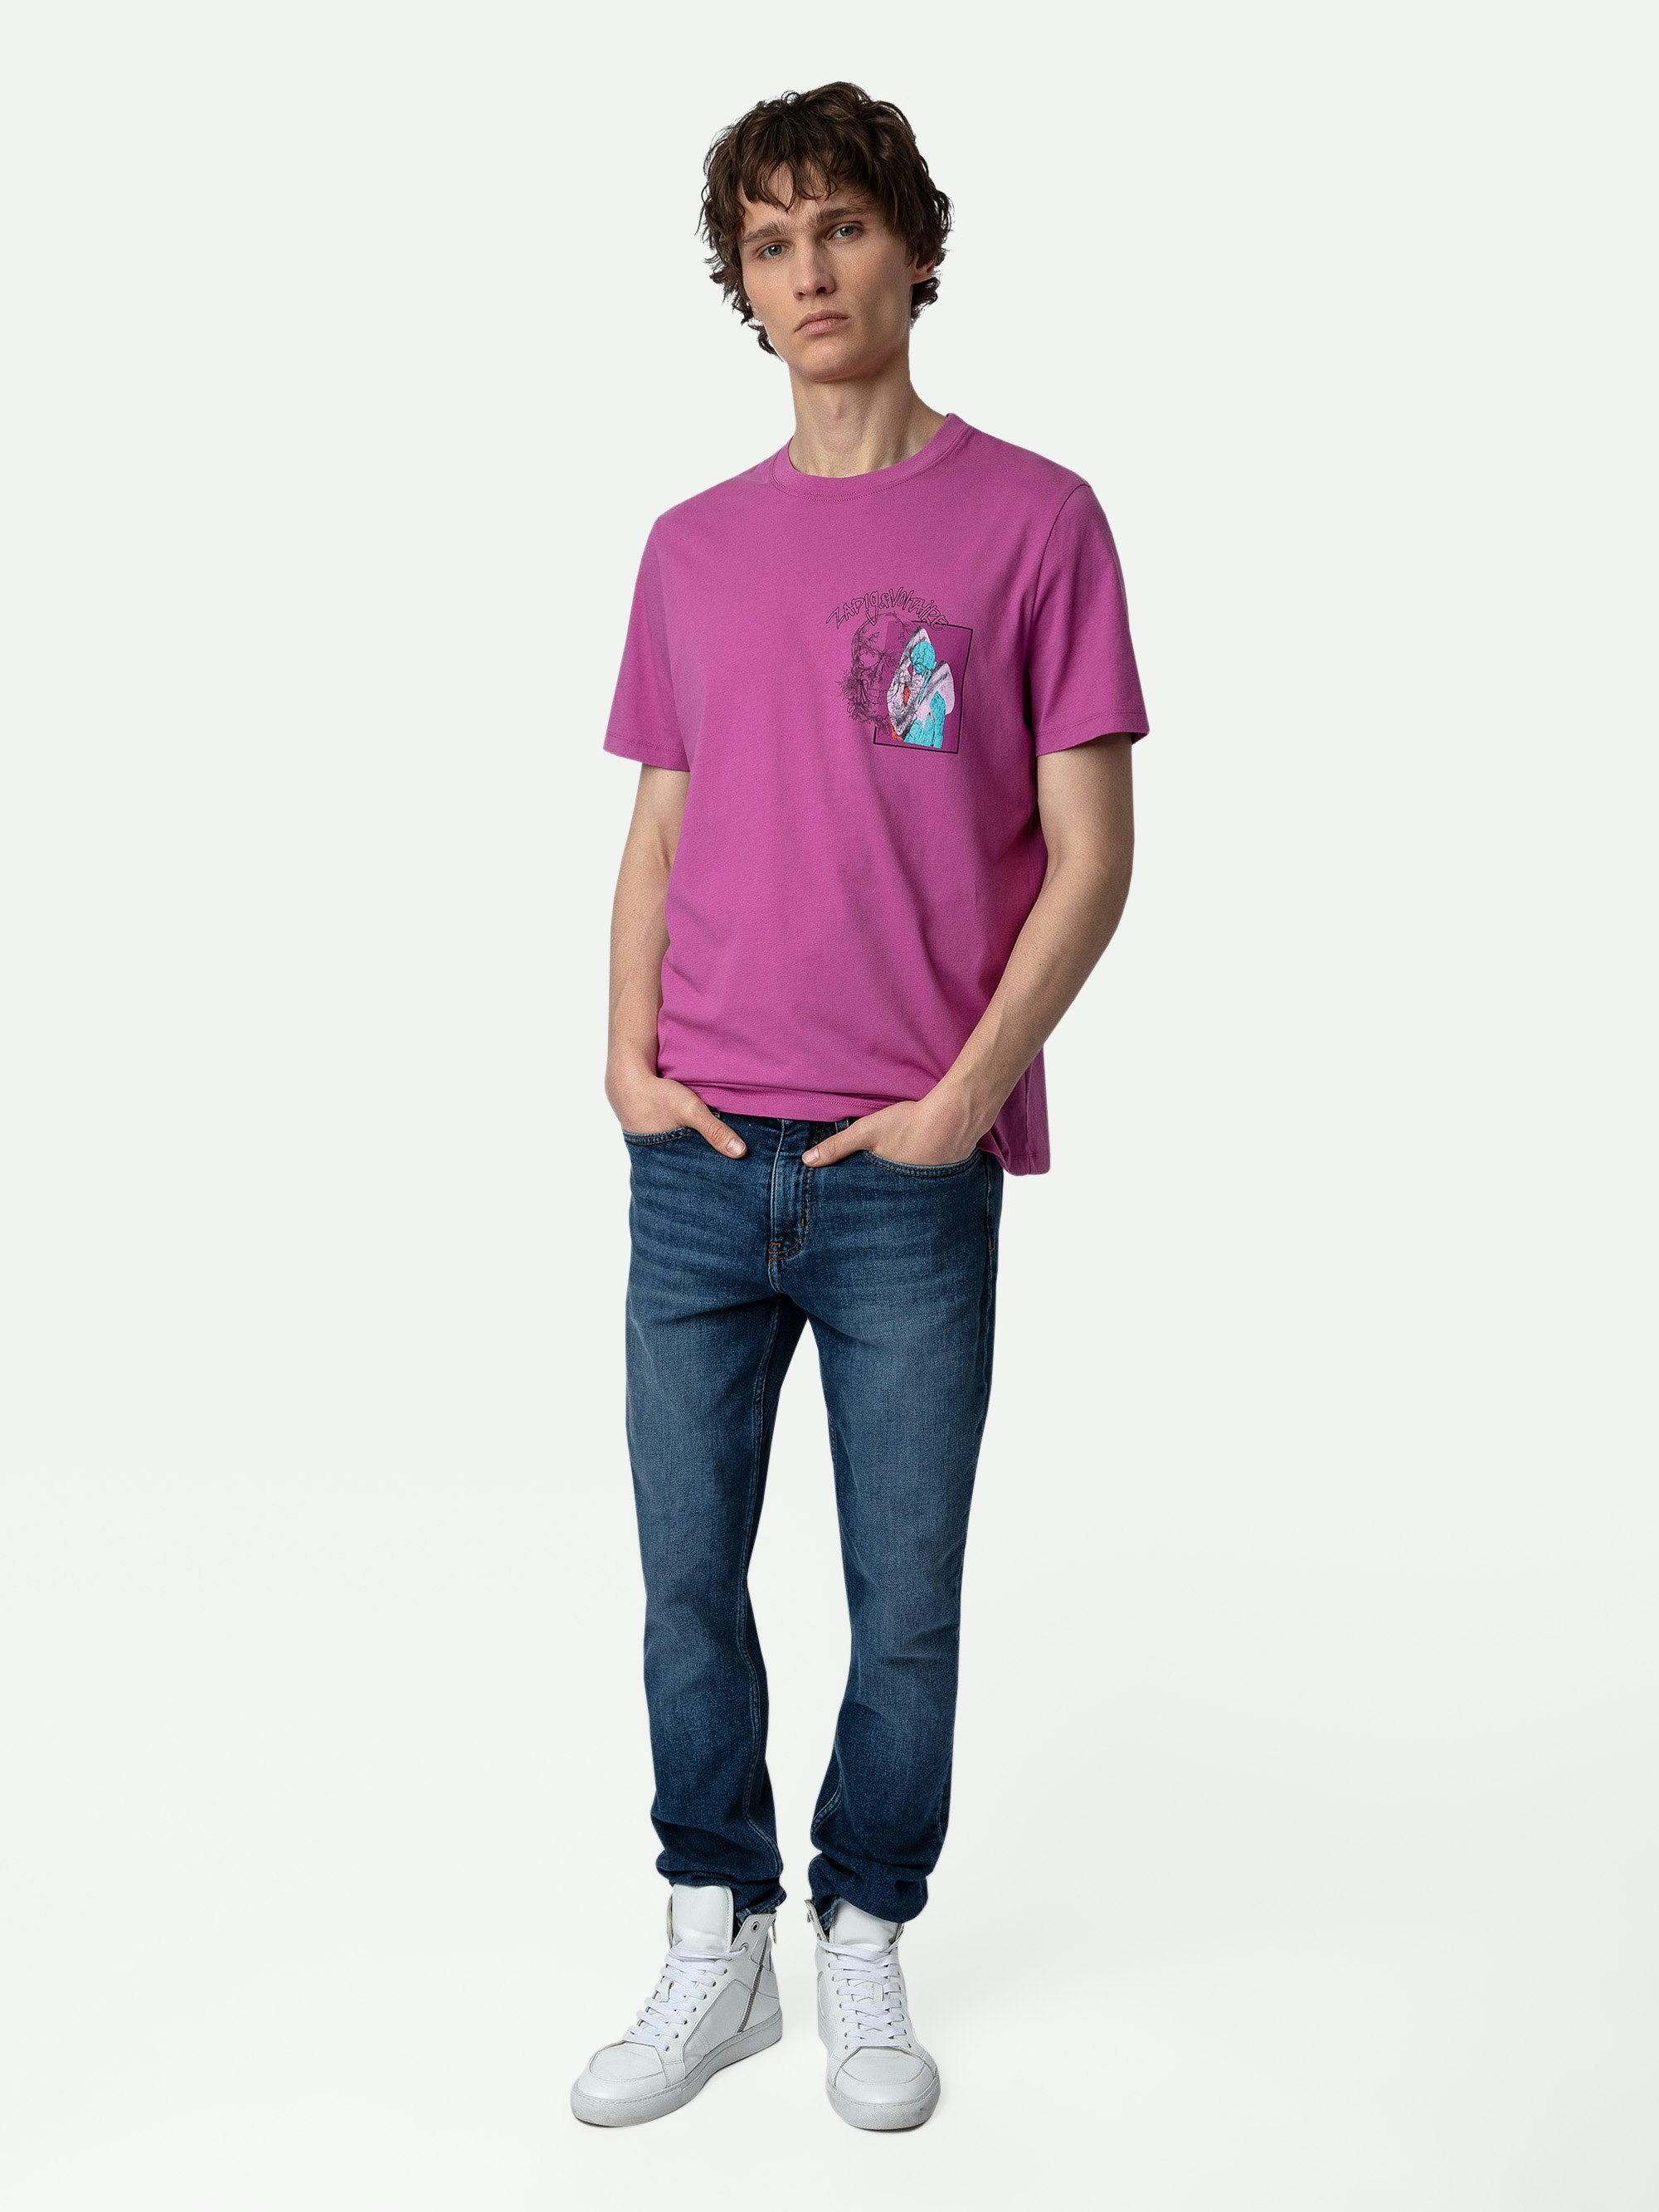 Ted Photoprint T-shirt - Fuchsia cotton T-shirt with Graffiti skull photoprint.